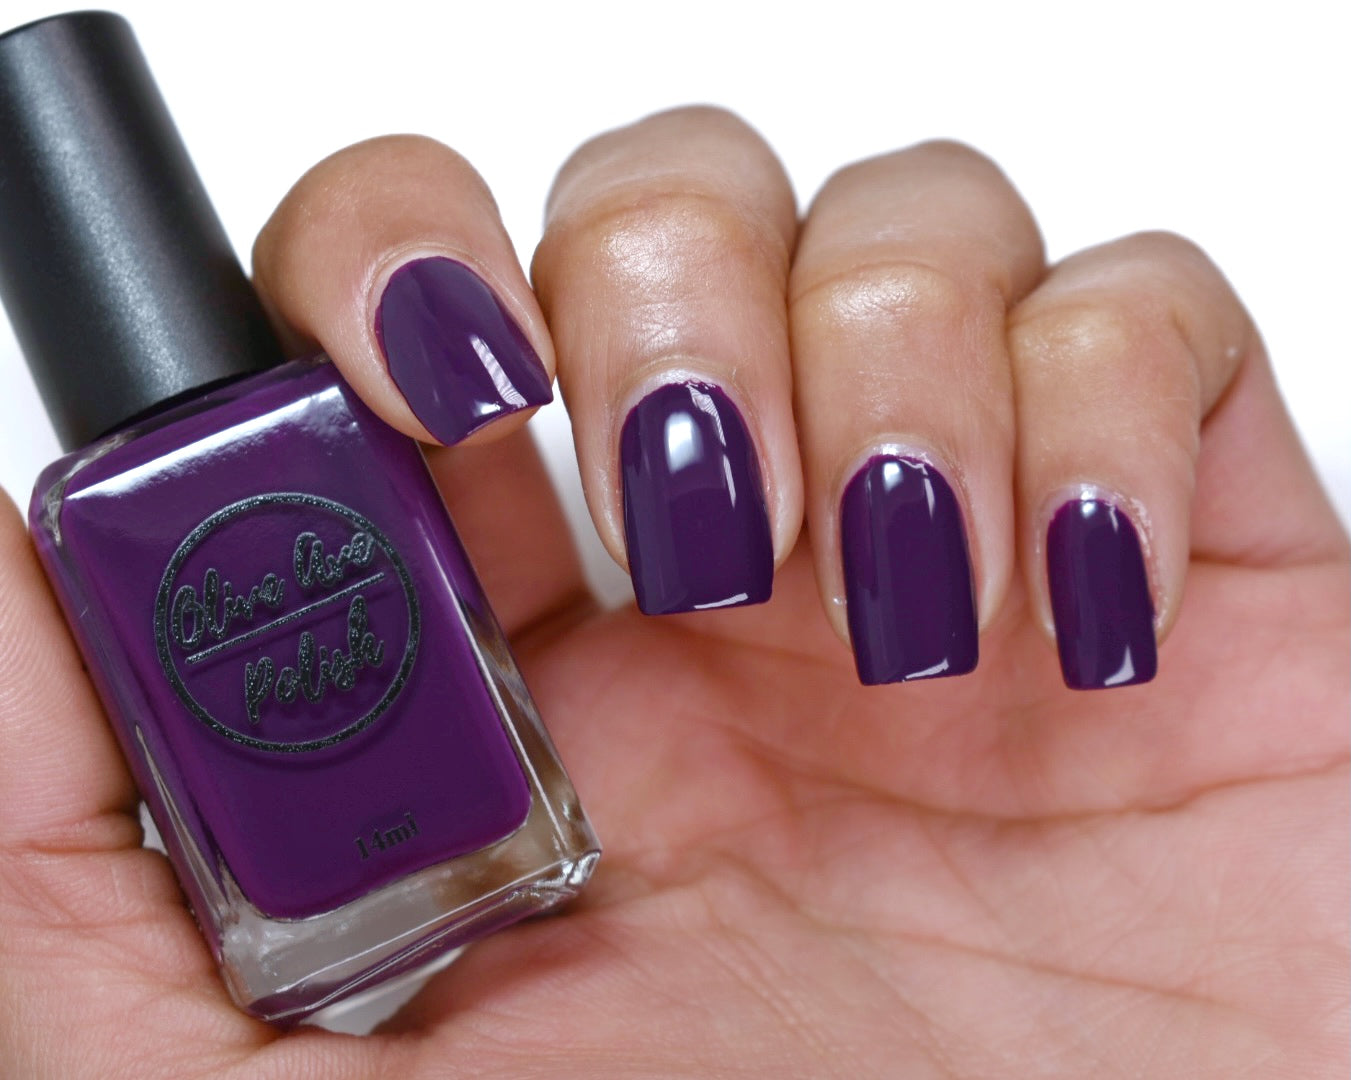 deep purple nail polish swatch on pale skin tone